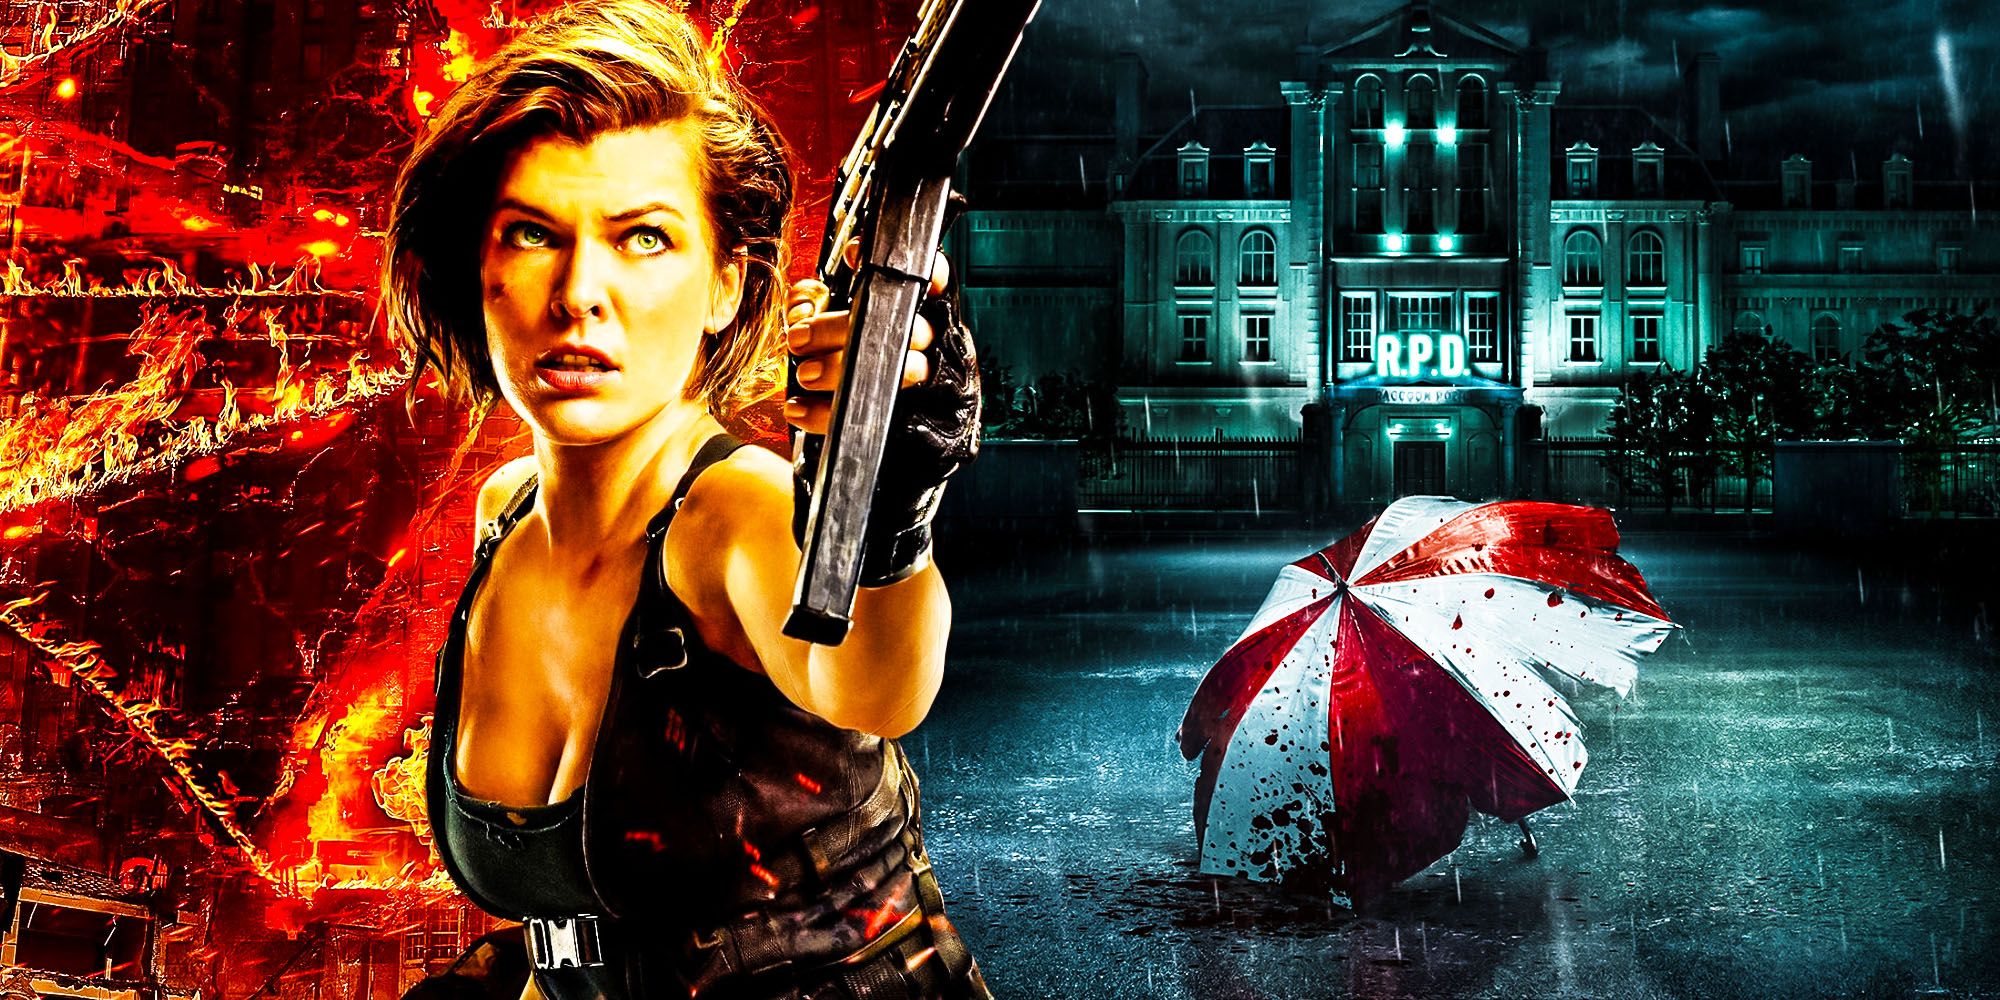 next Resident evil movie can bring back milla jovovich